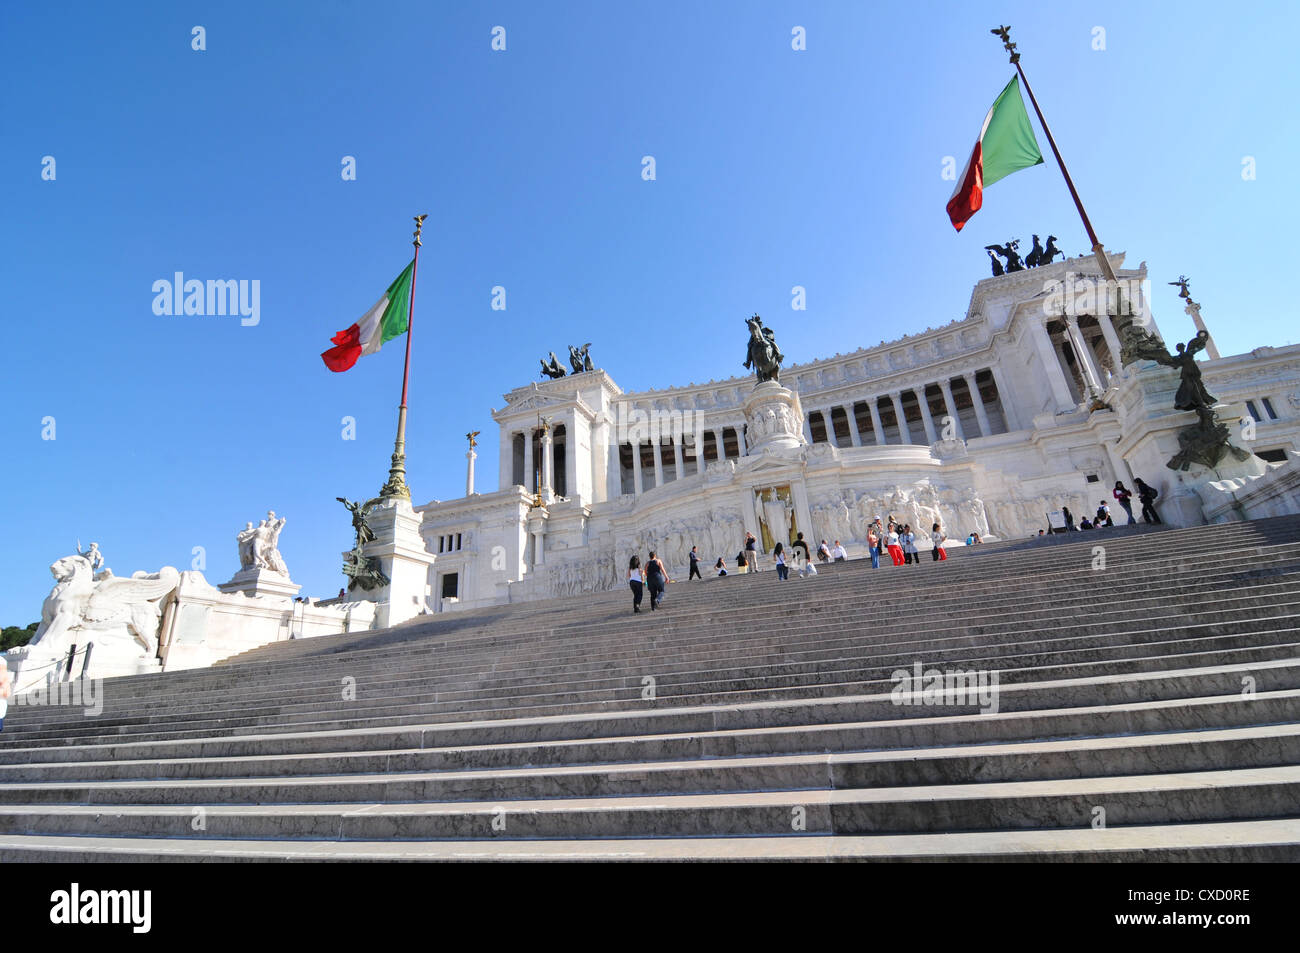 Rome, Italy - 30 March, 2012: Tourists visiting Piazza Venezia, major square and touristic attraction in central Rome Stock Photo